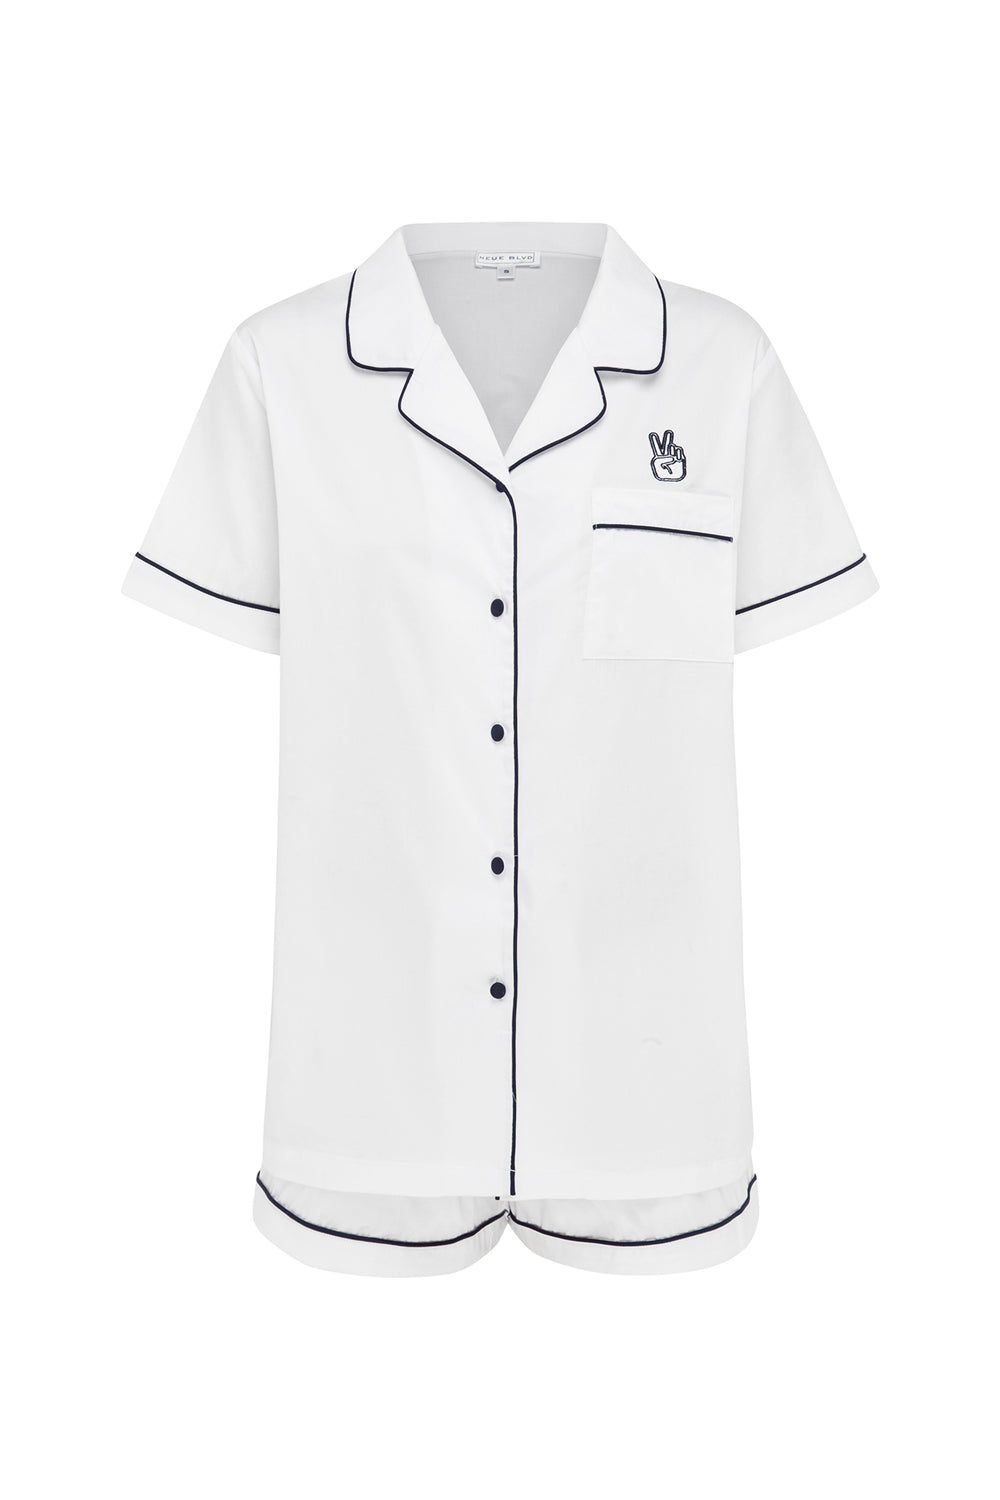 White monogrammed short sleeve and shorts